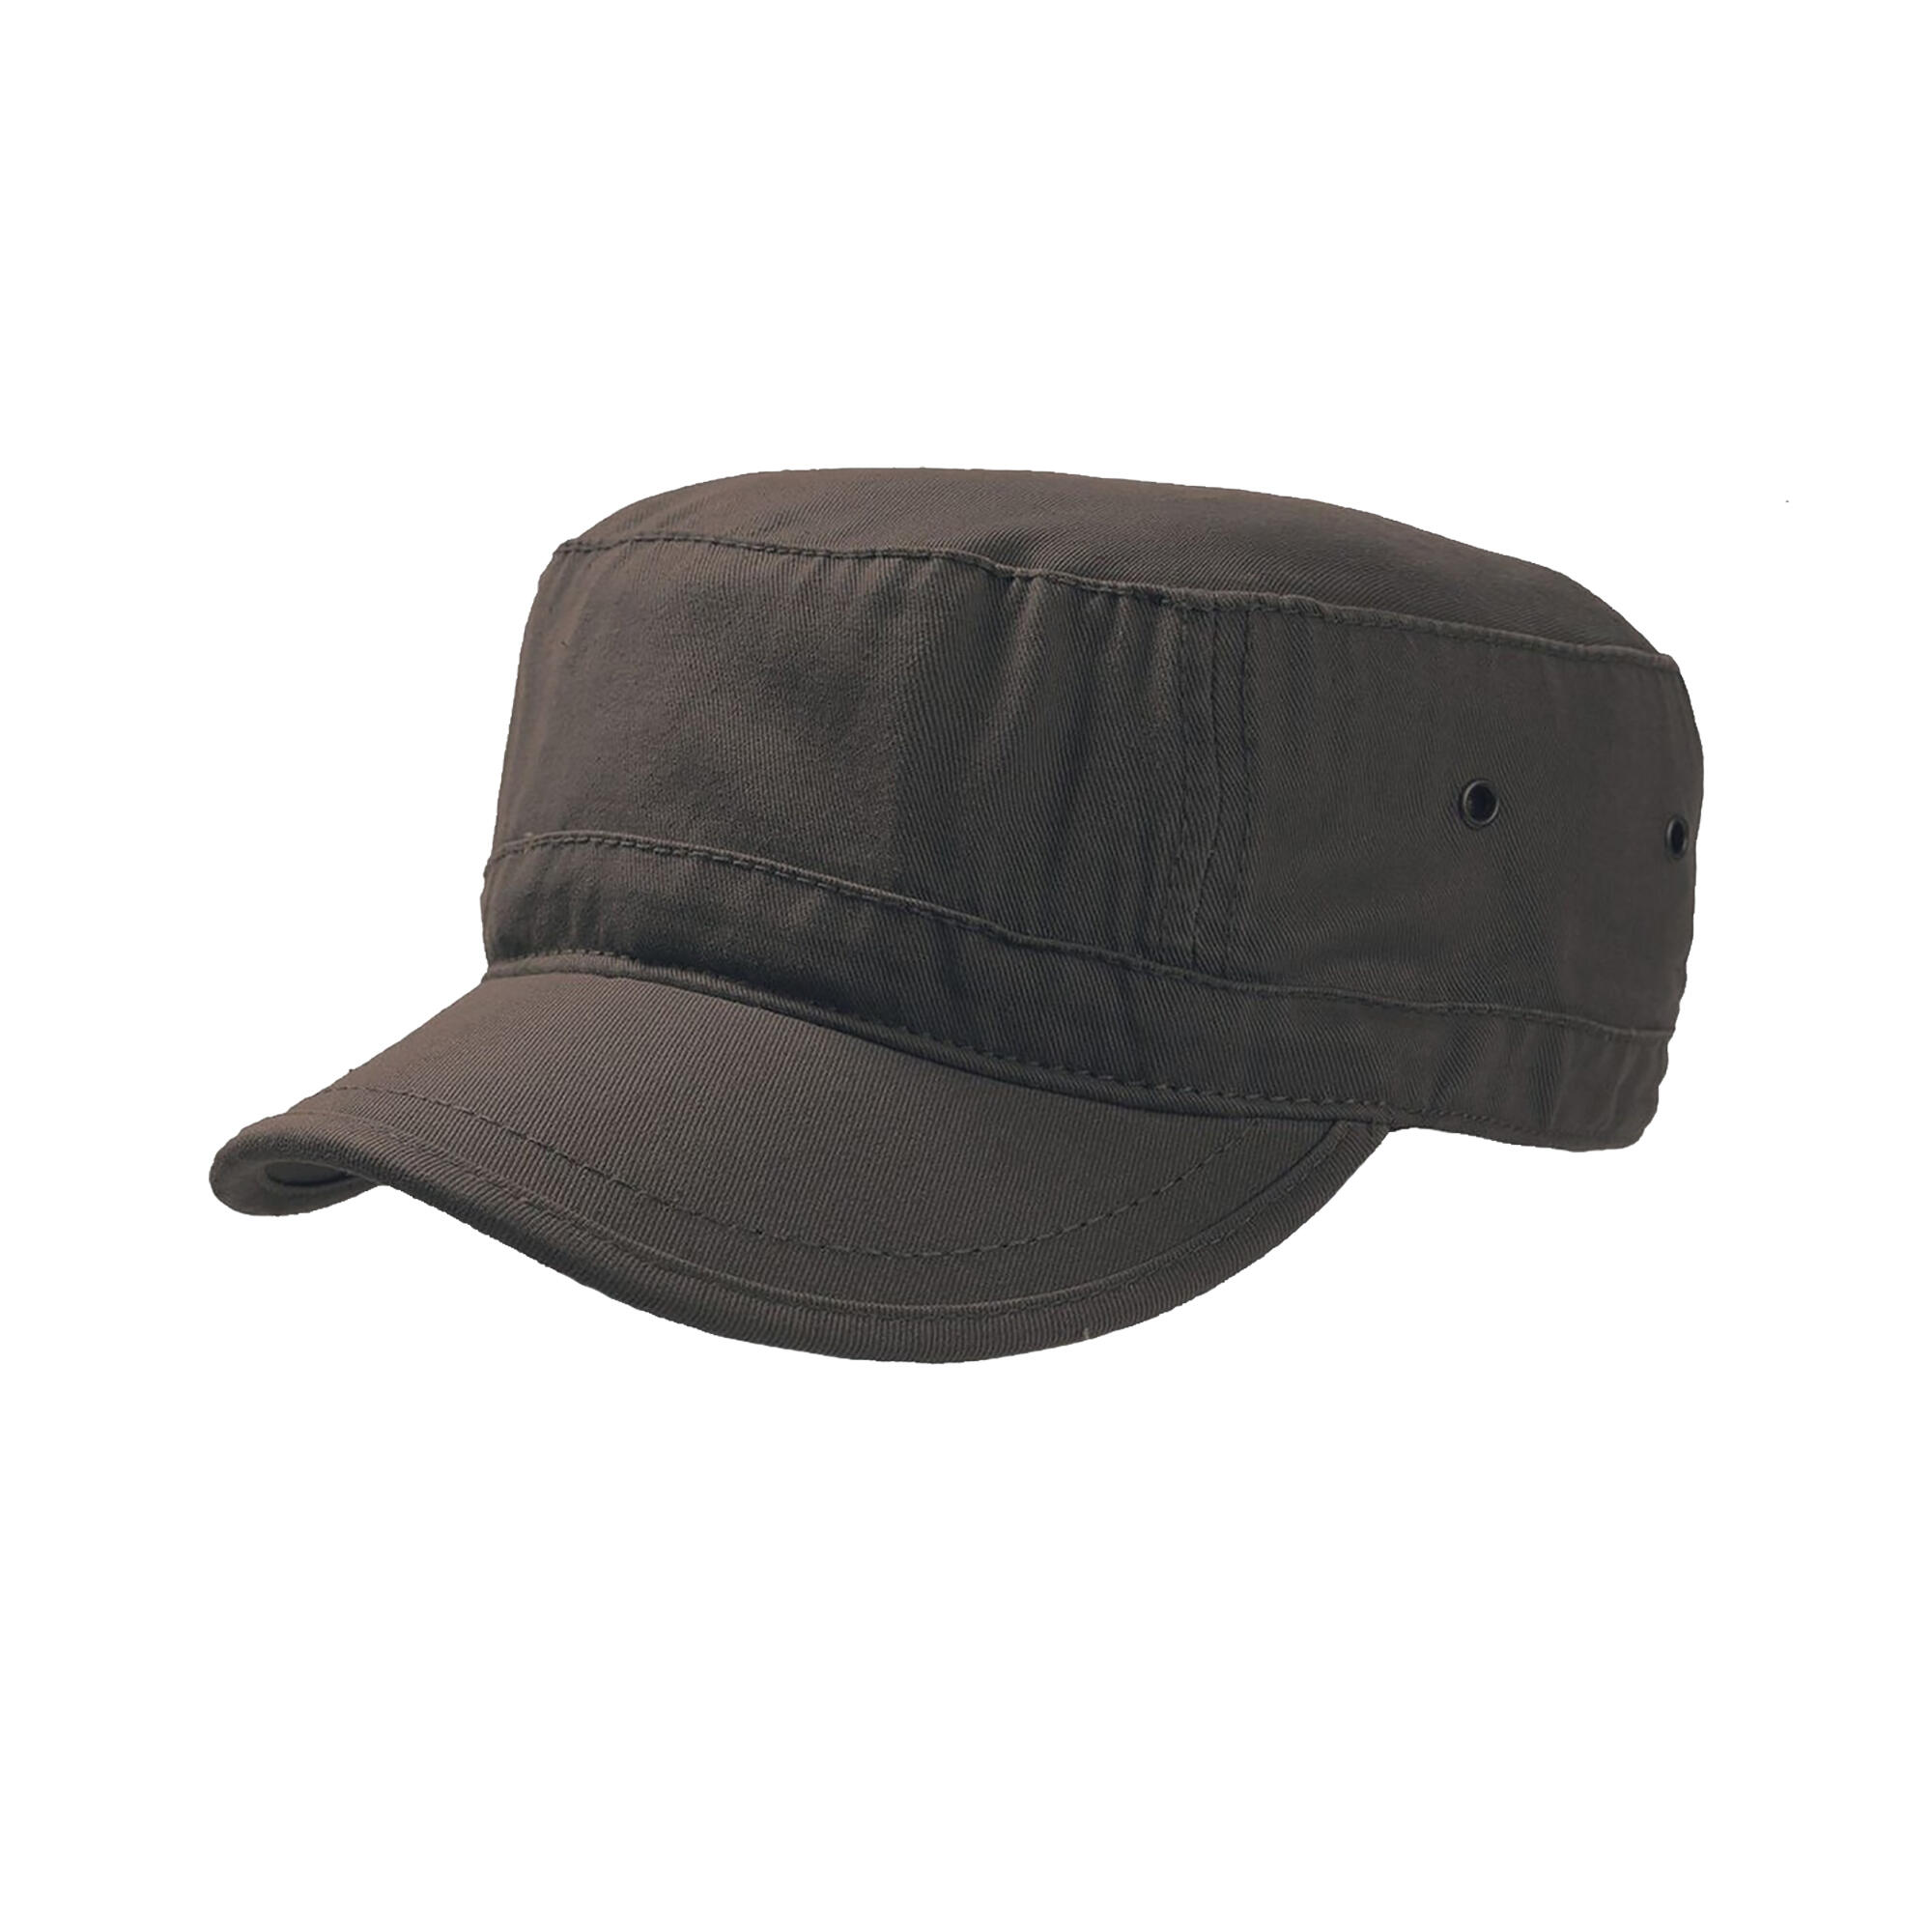 ATLANTIS Chino Cotton Urban Military Cap (Pack of 2) (Brown)